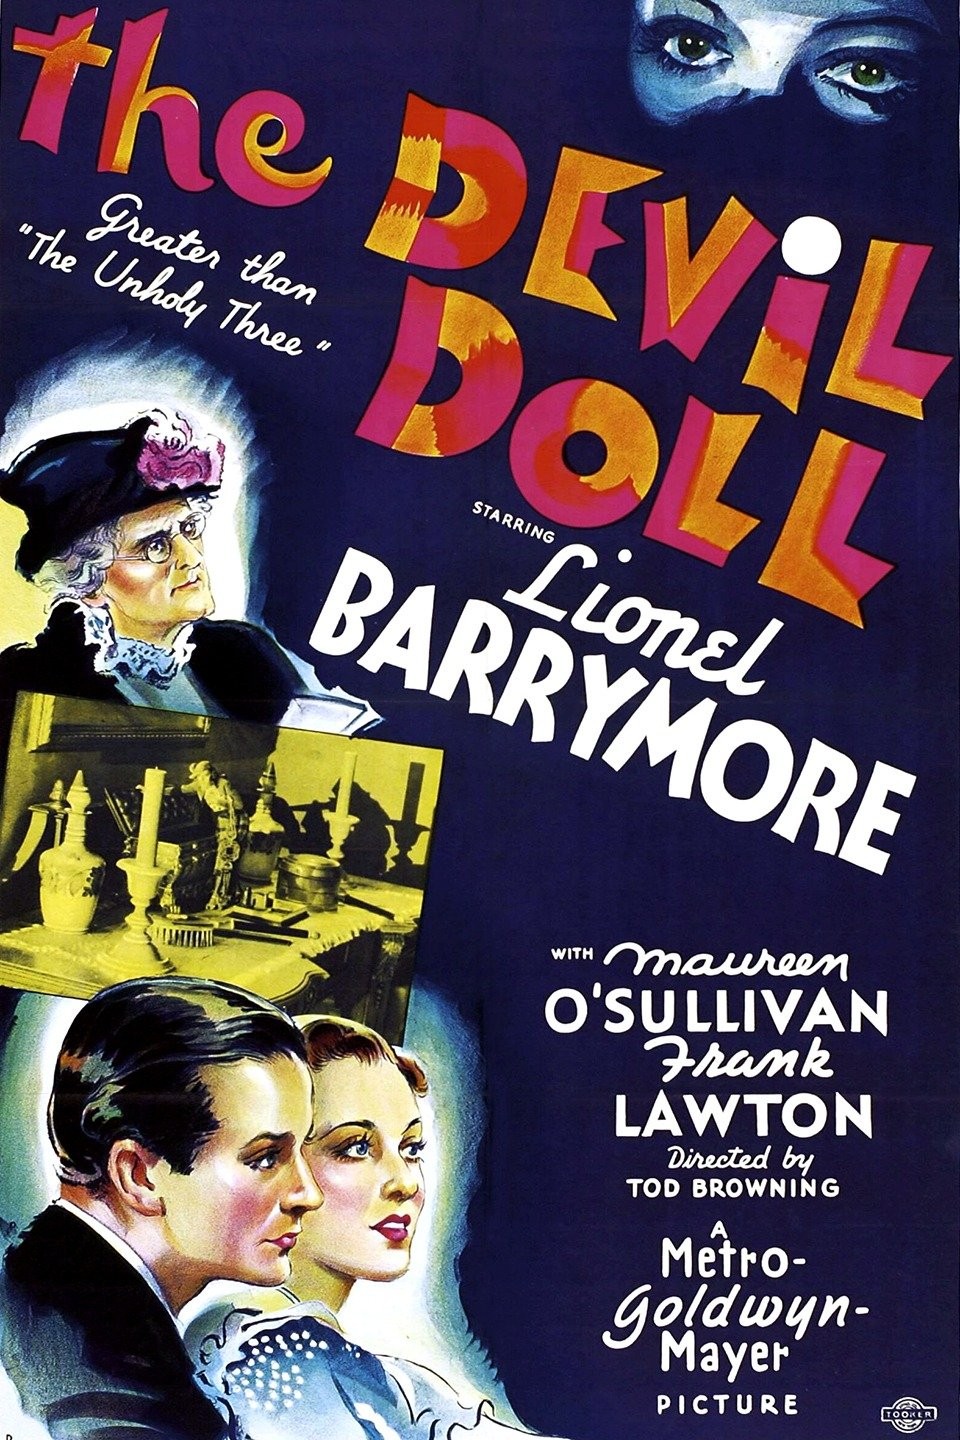 One Rainy Afternoon (1936) - IMDb